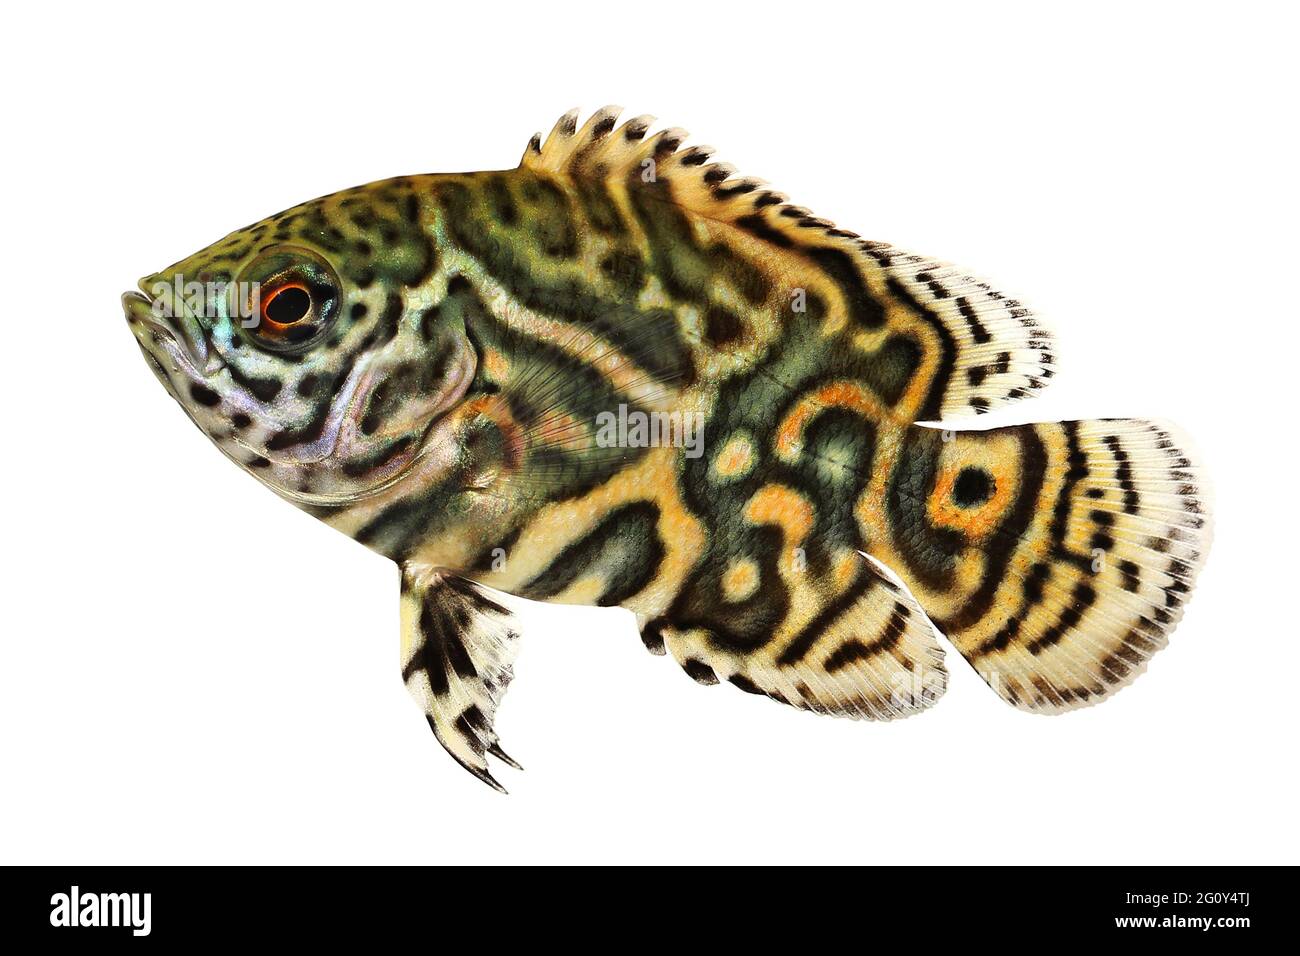 Tiger Oscar Cichlid Astronotus ocellatus aquarium fish Stock Photo